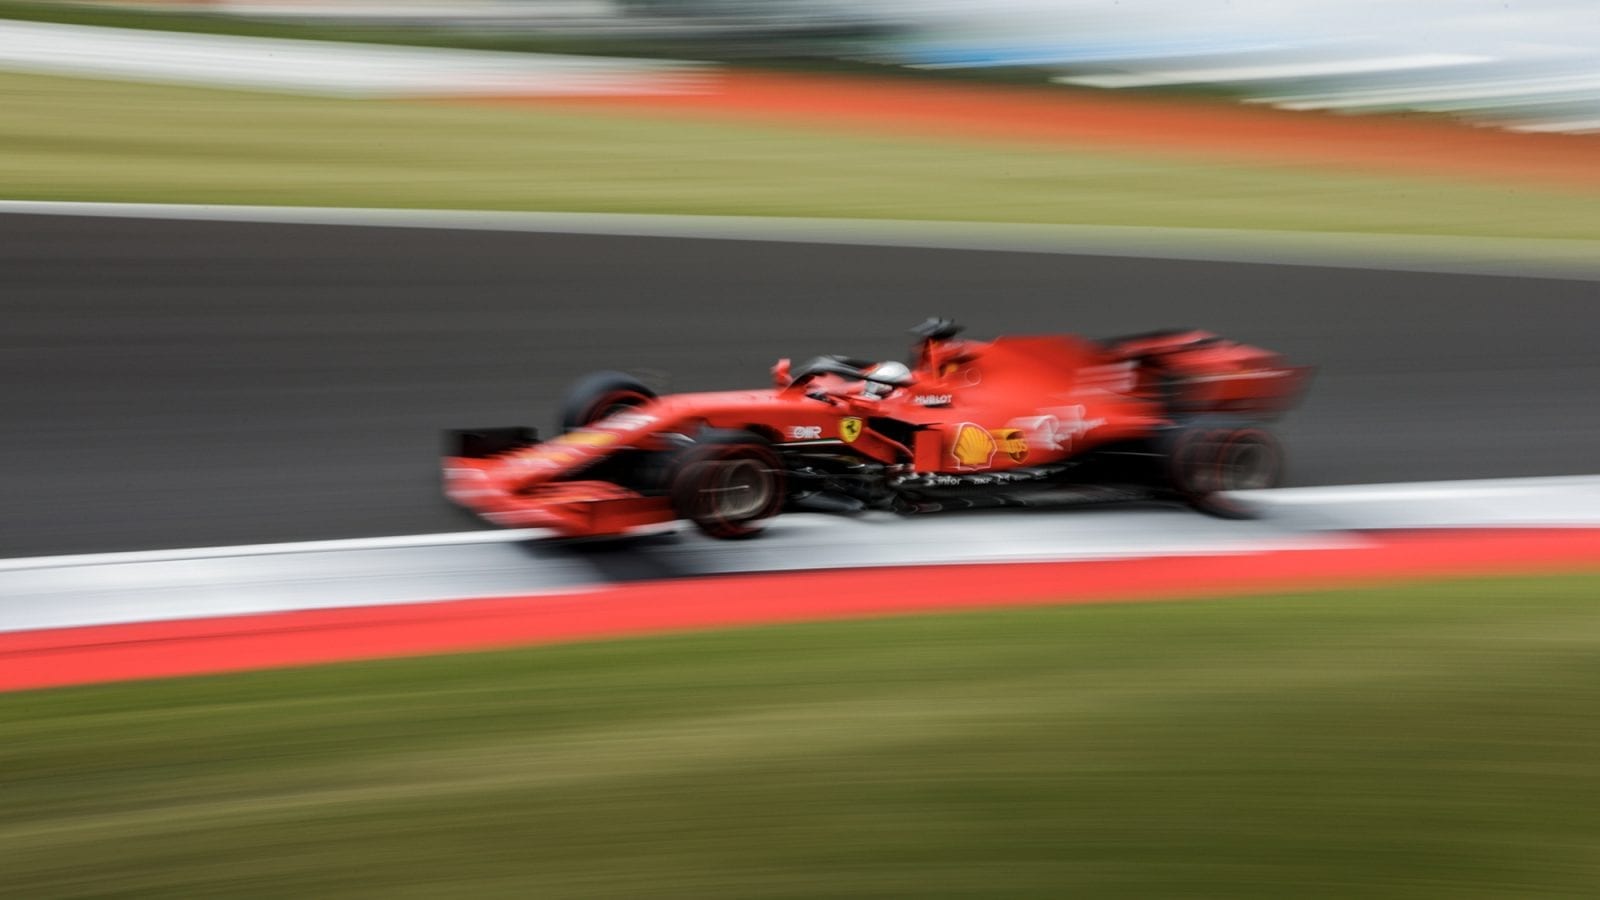 Blurred image of Sebastian Vettel’s Ferrari during the 2020 British Grand Prix at Silverstone